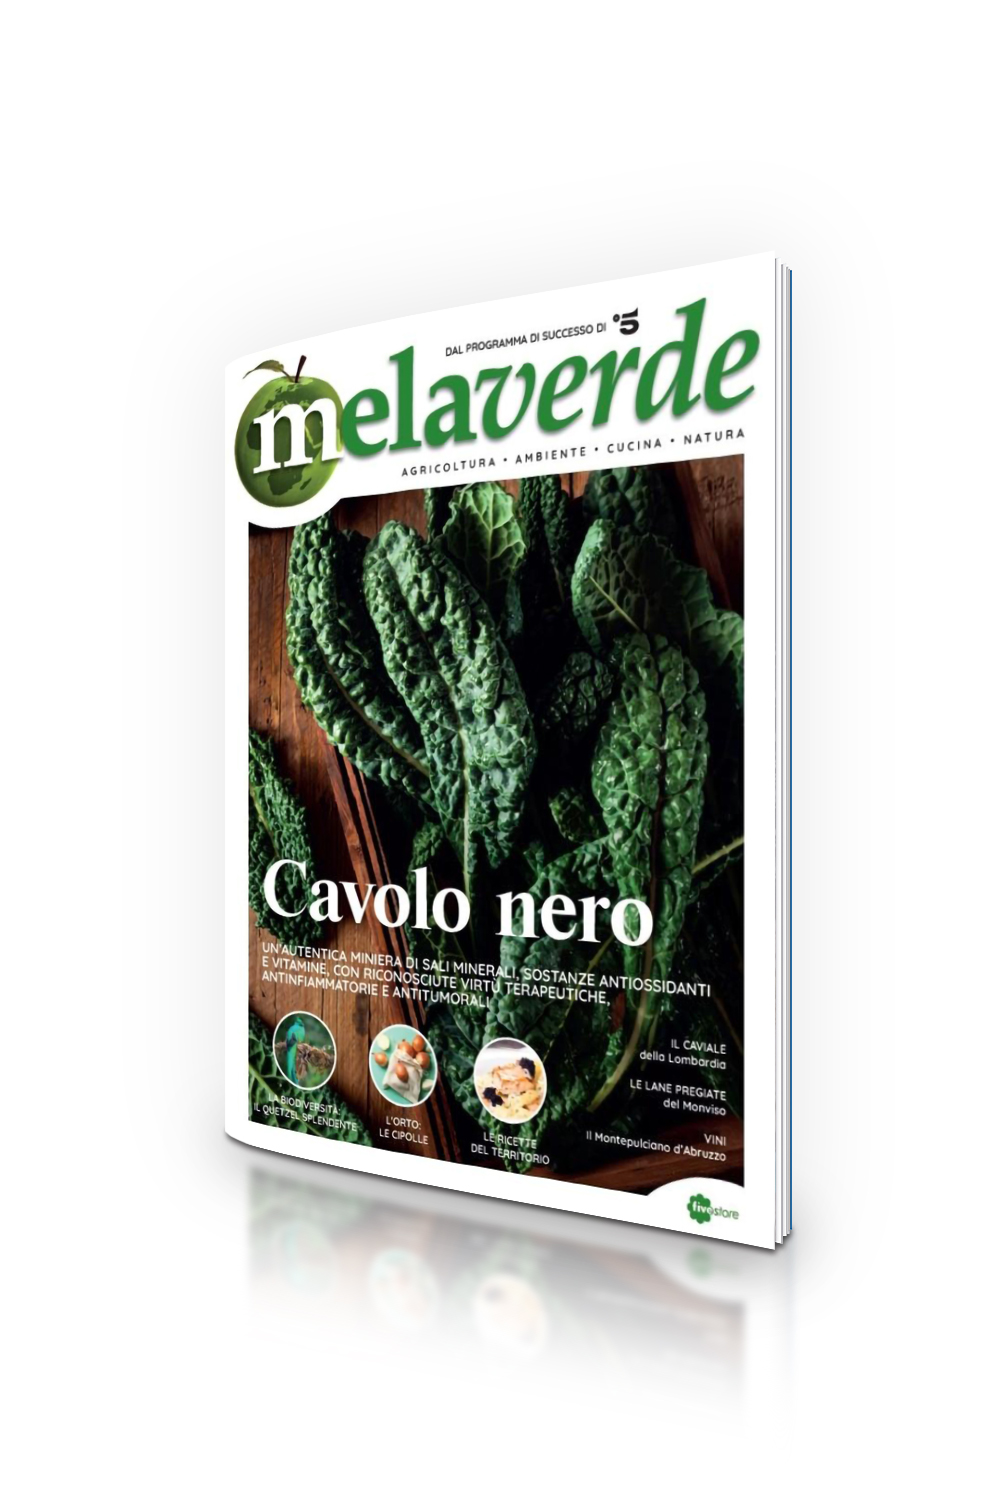 Melaverde Magazine